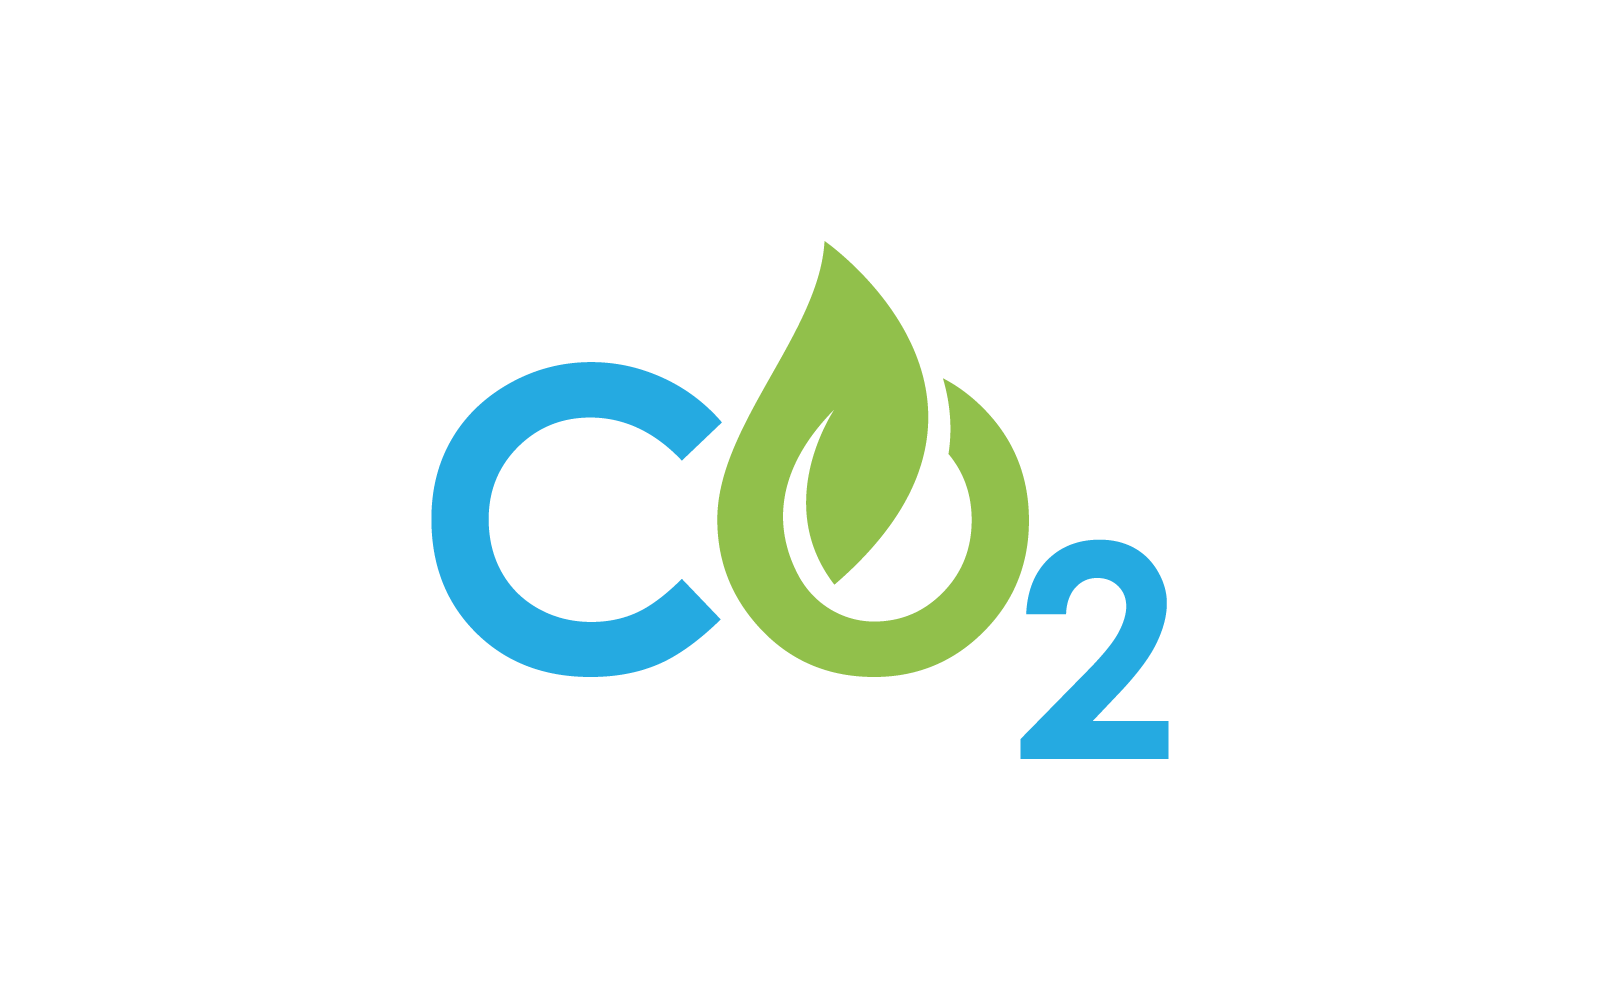 Co2 Carbon dioxide logo illustration template Logo Template